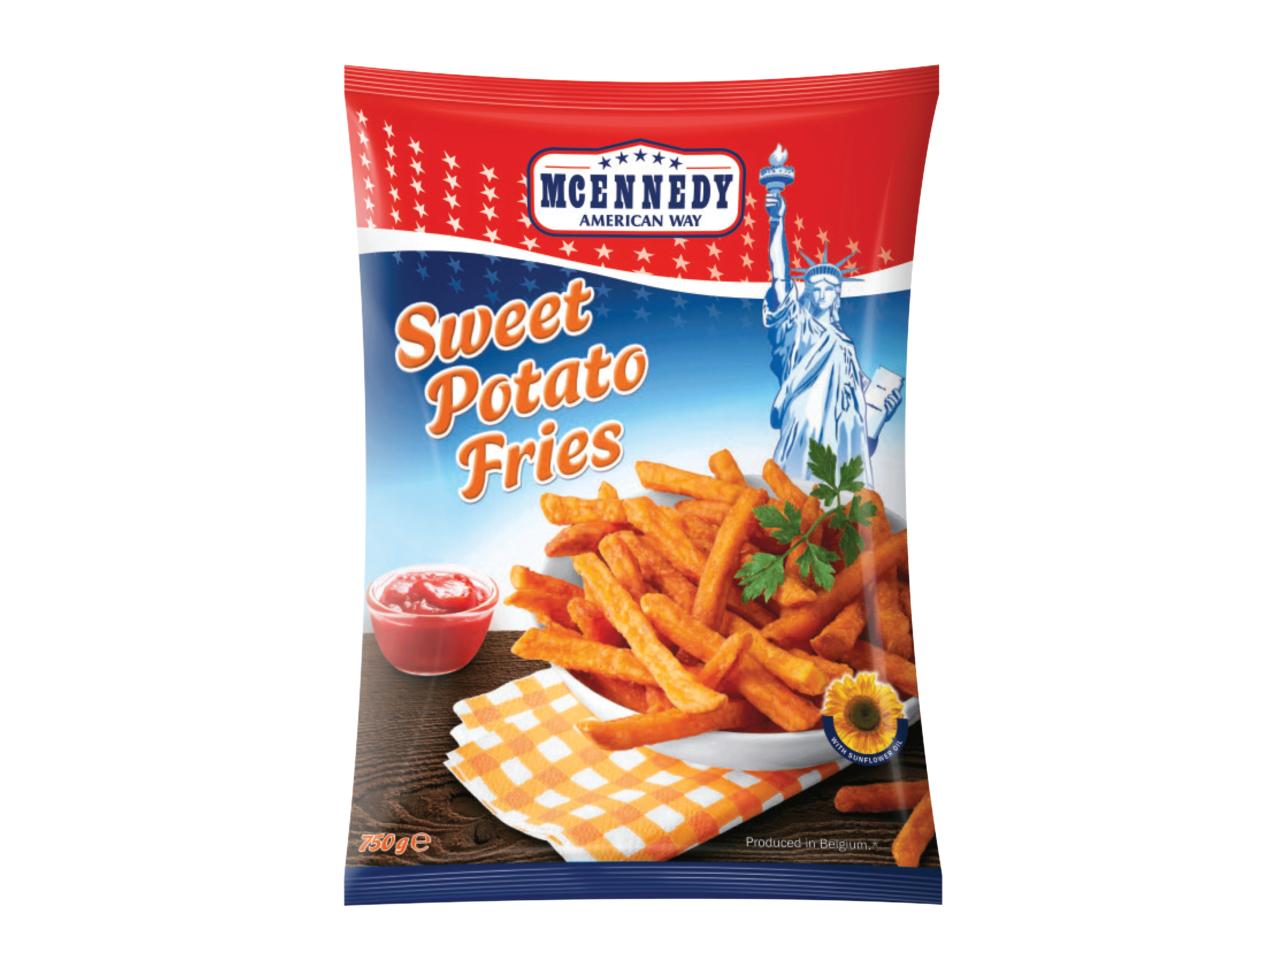 MCENNEDY(R) Sweet Potato Fries